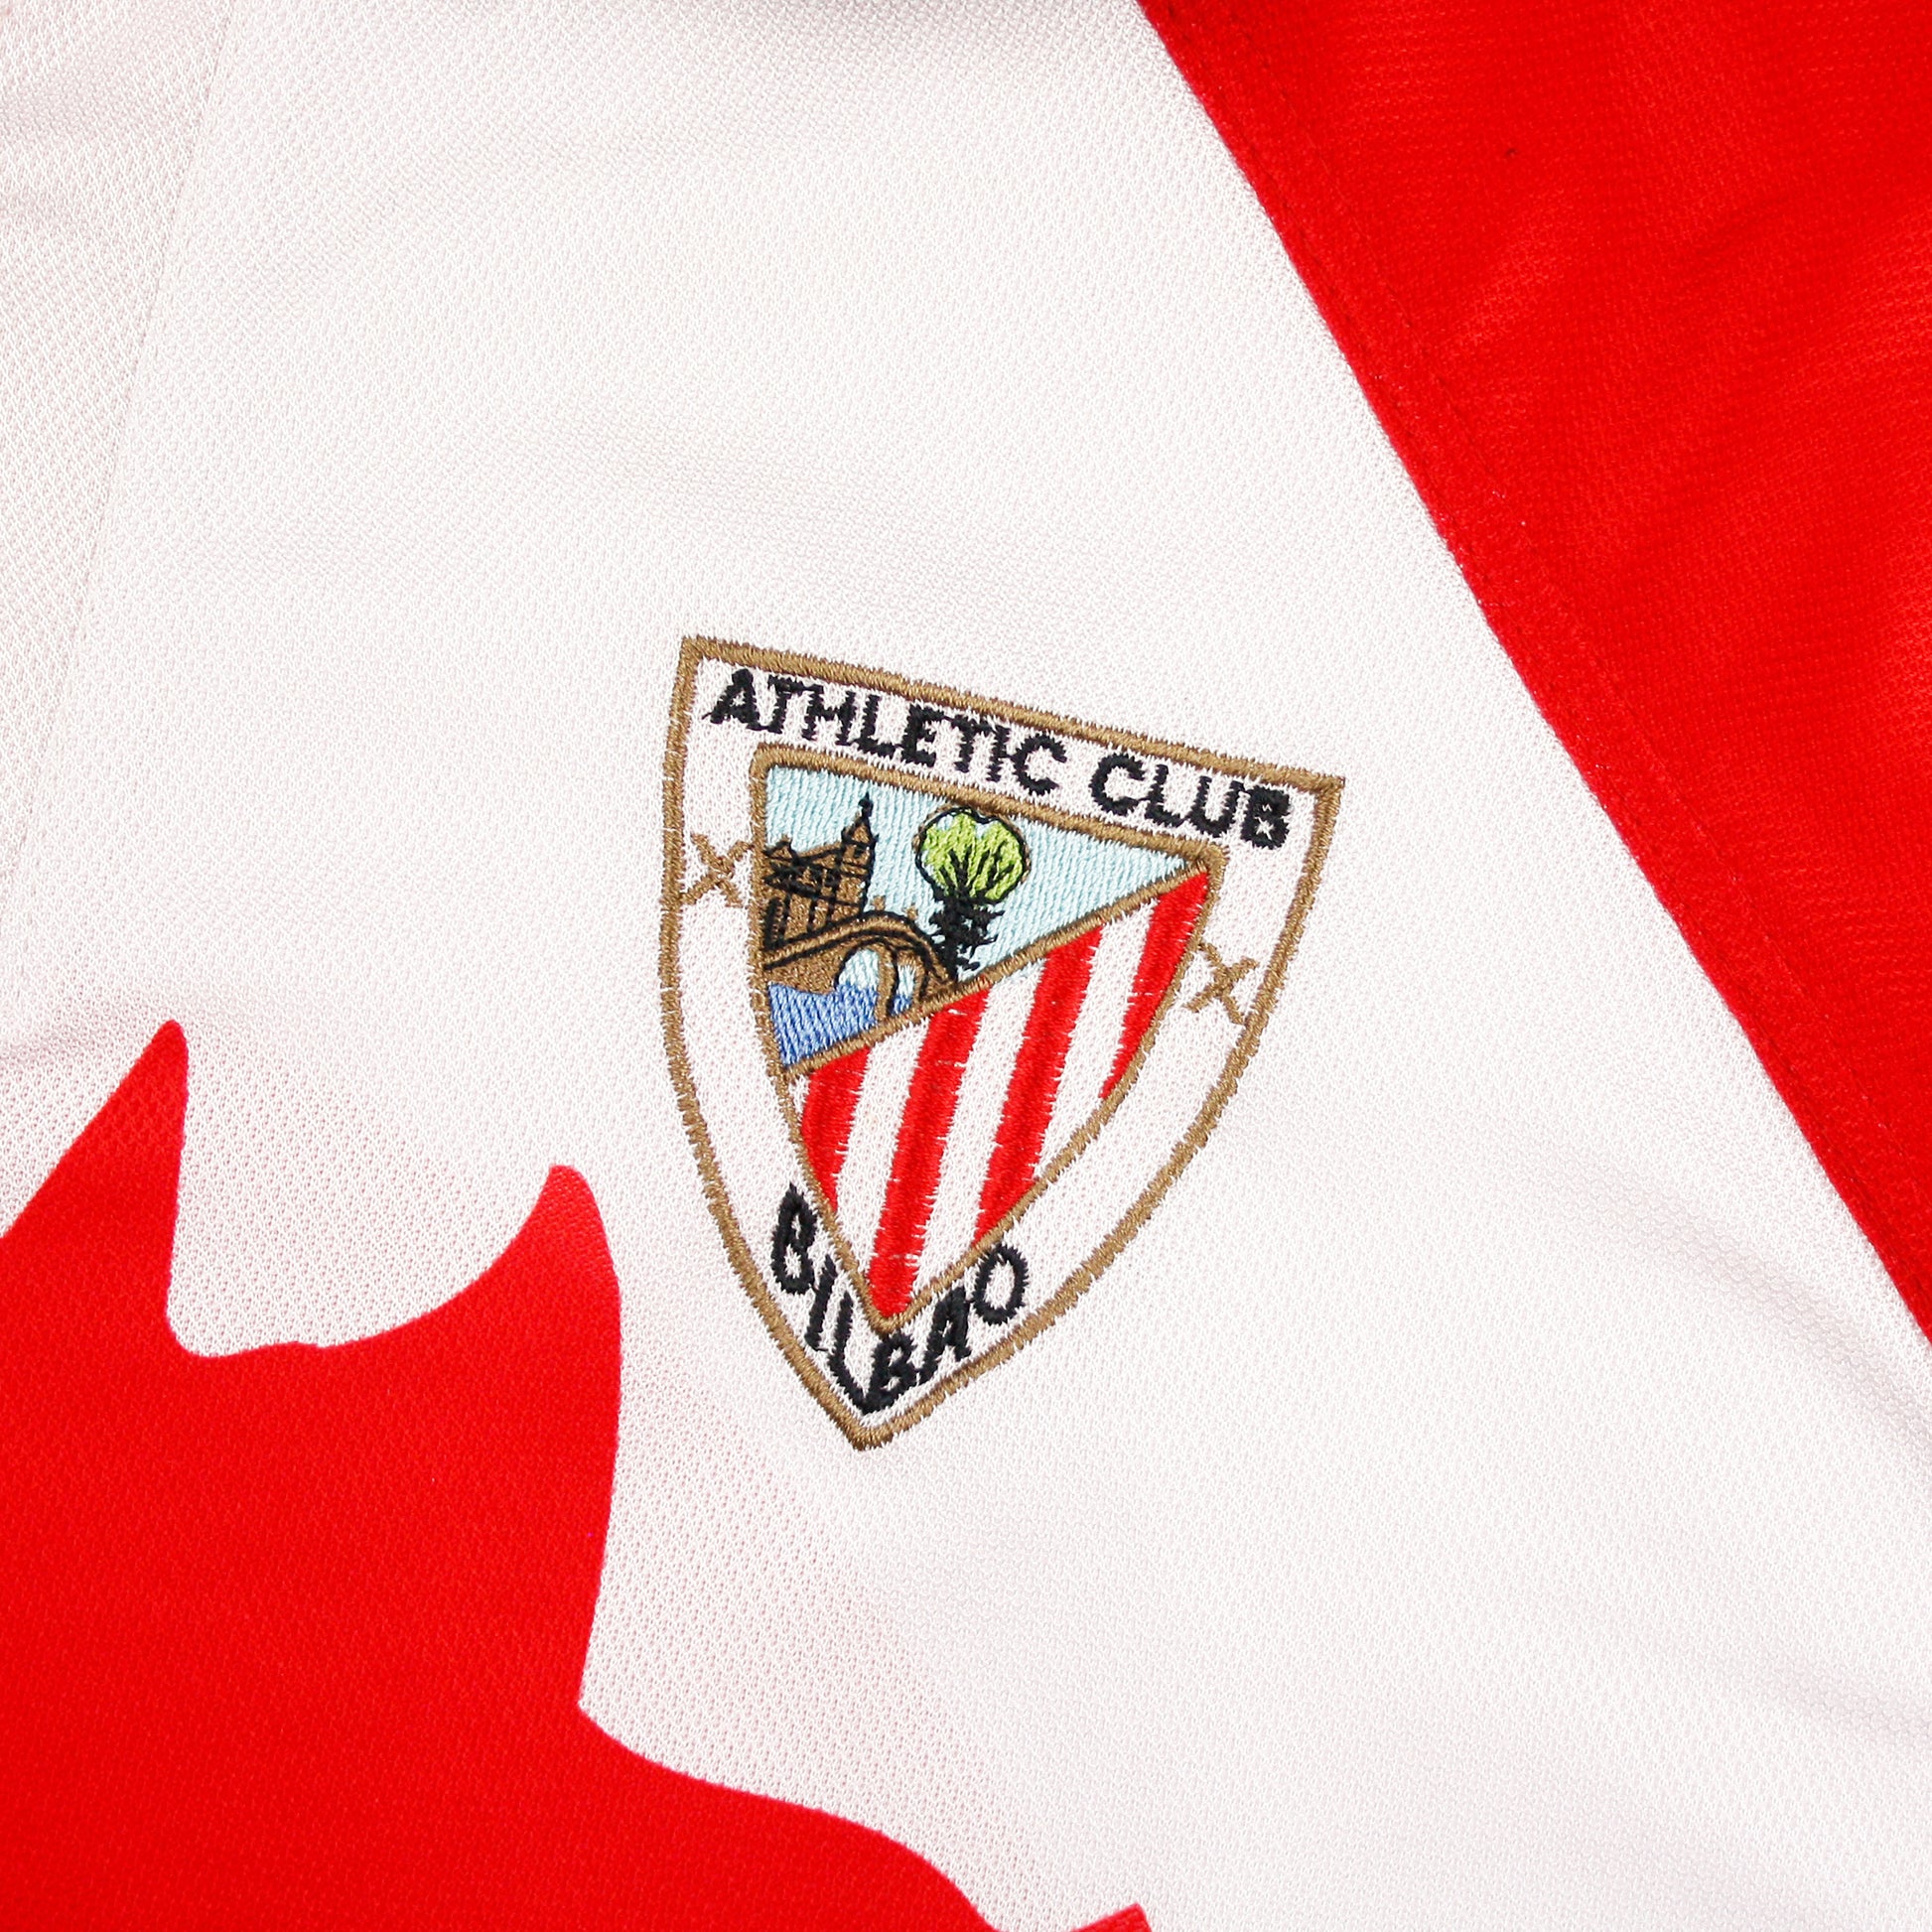 Camiseta Athletic Club Bilbao 98/99 – Lifelong Trends